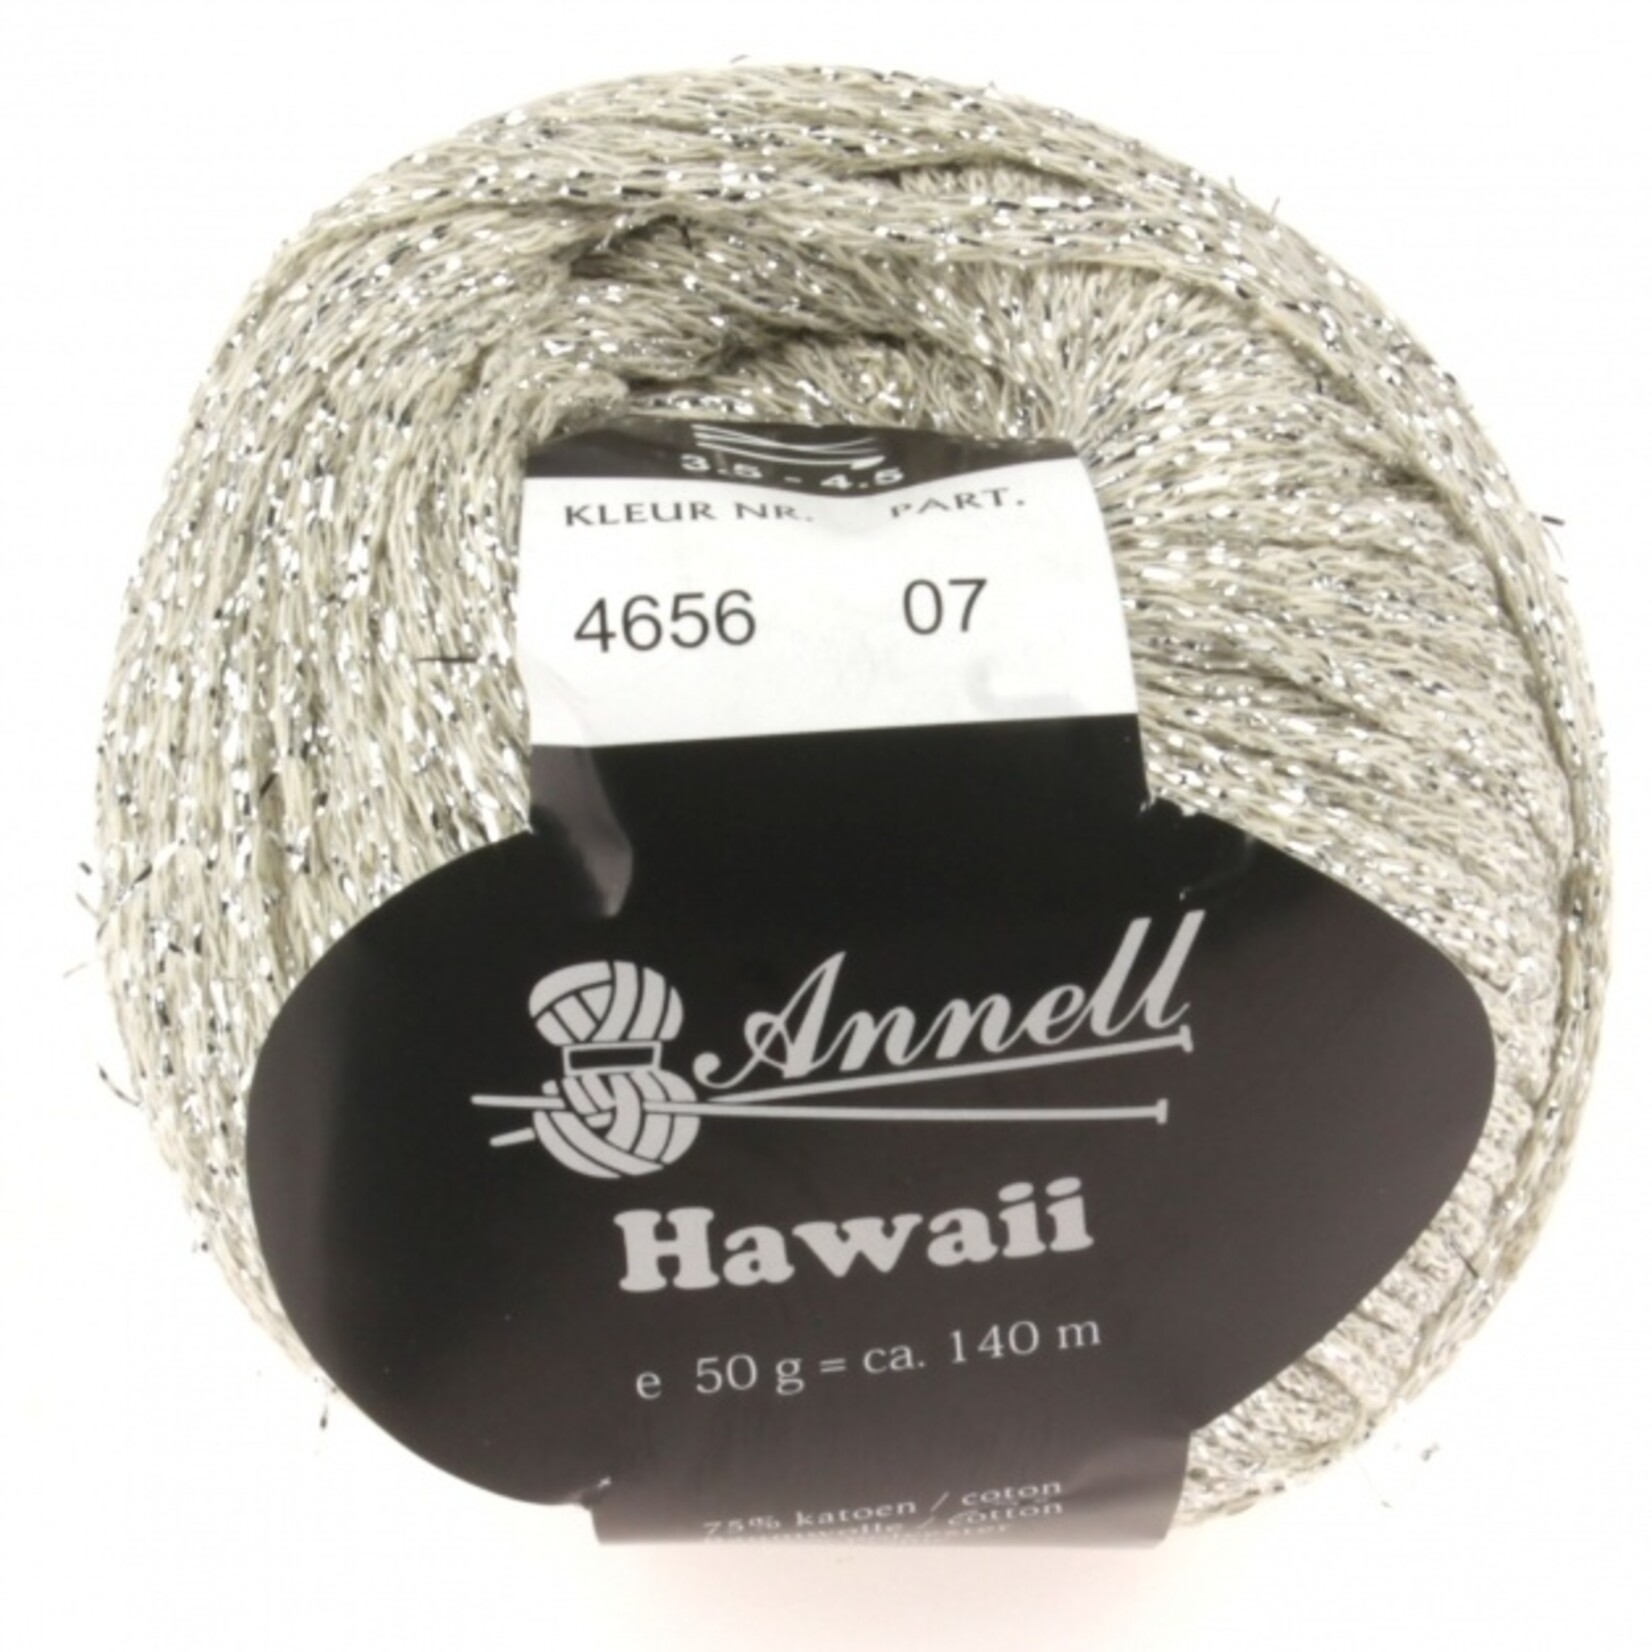 annell hawai 4656